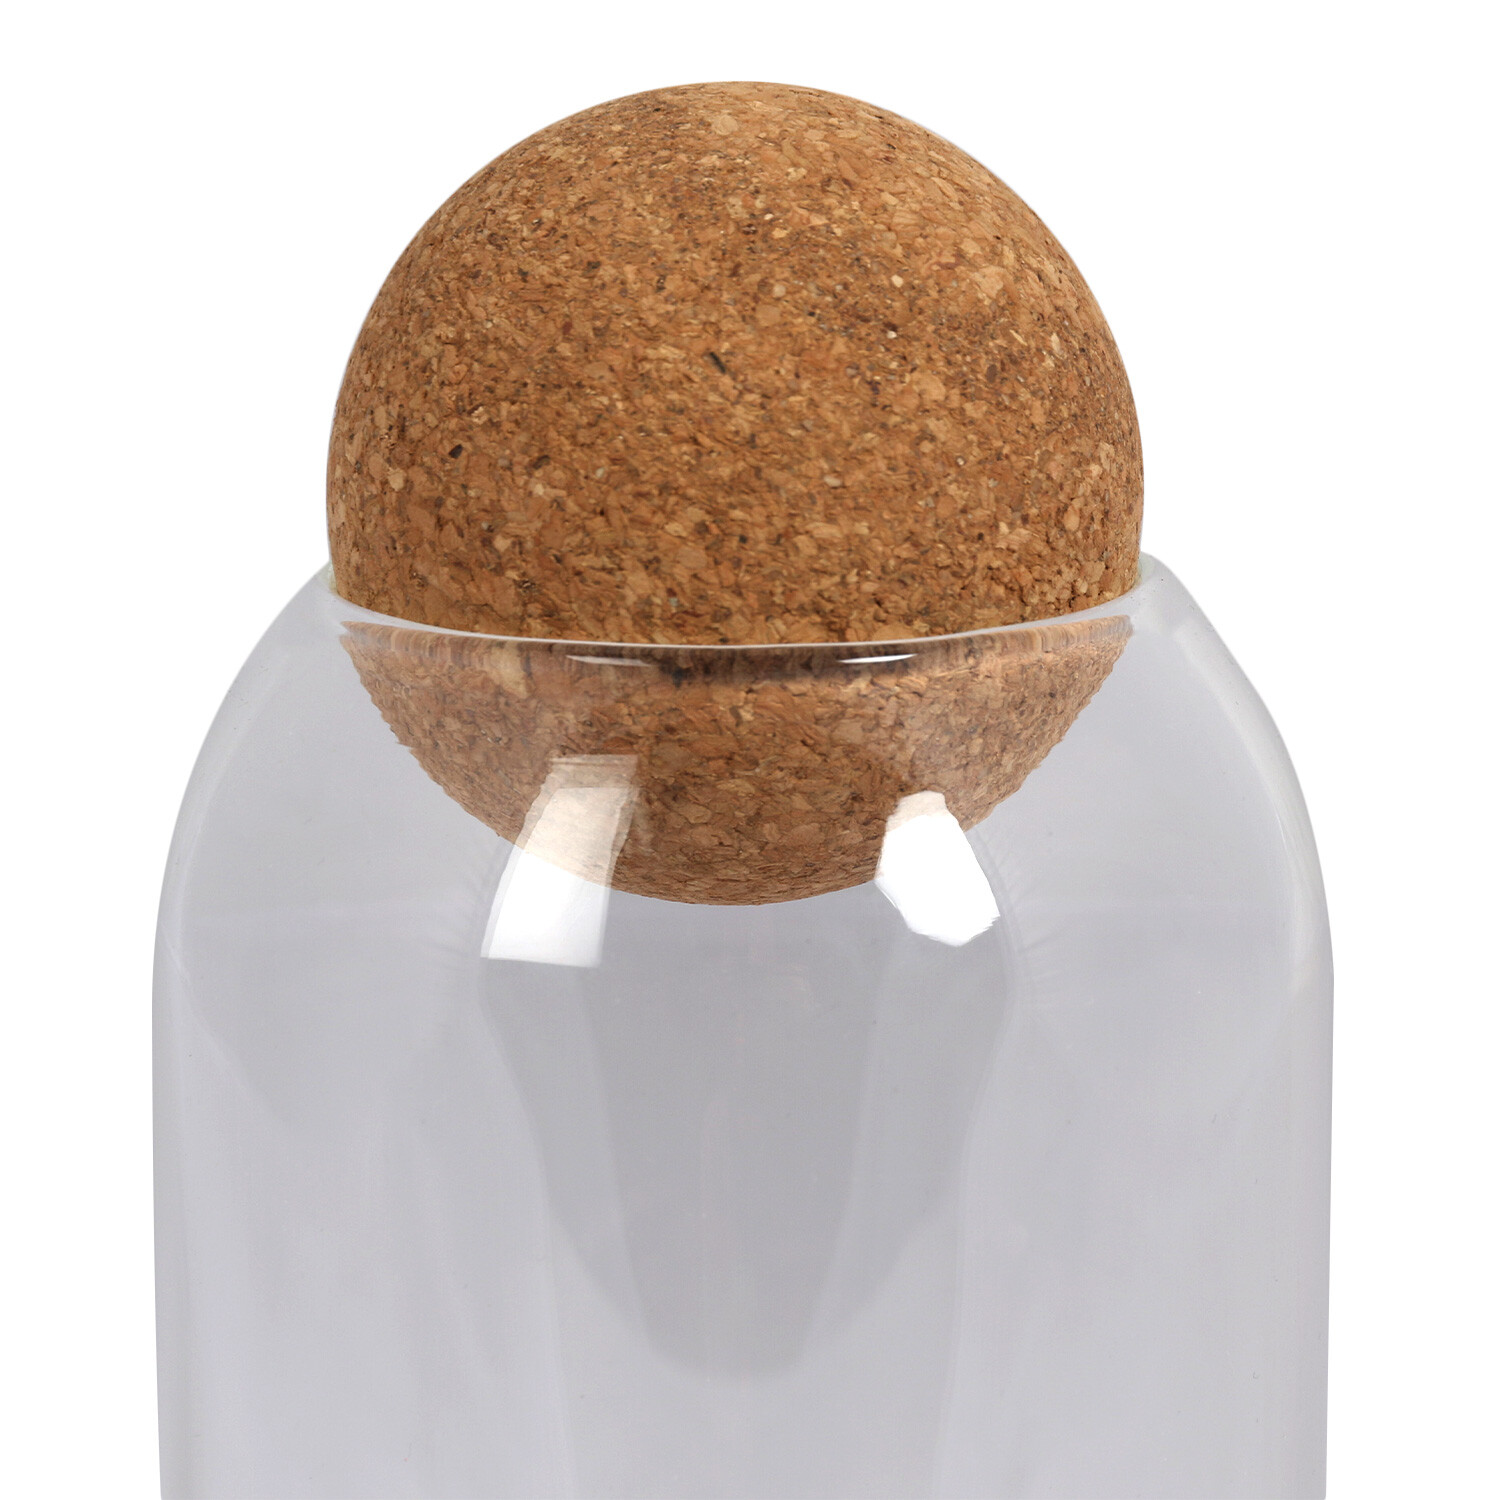 Storage Jar with Cork Lid - Clear / 800ml Image 2